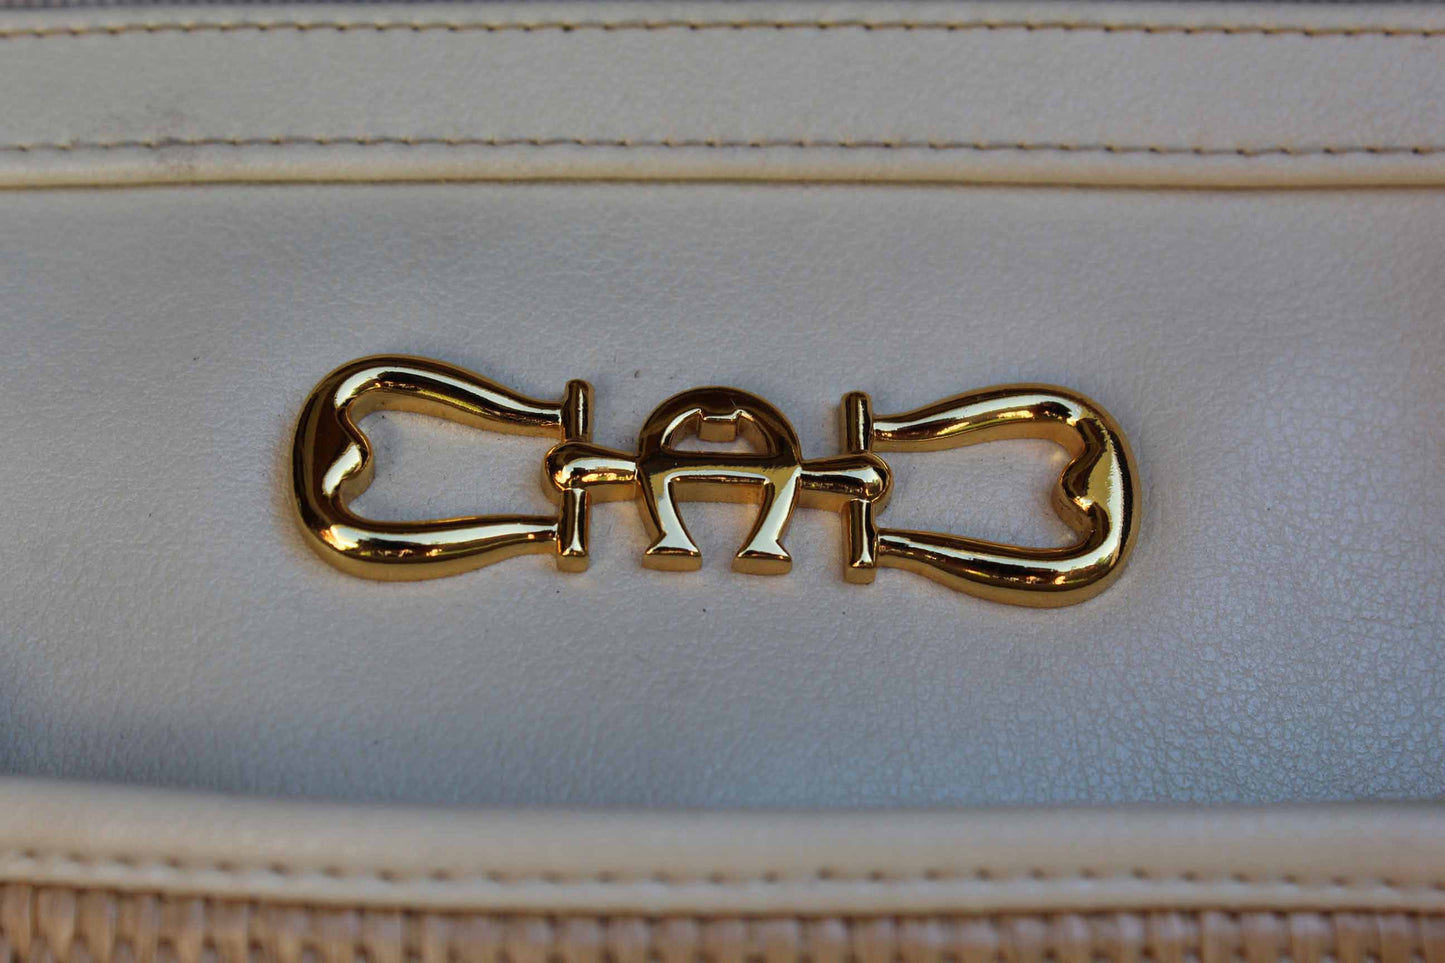 Etienne Aigner (New York, USA) Cream Leather and Straw Handbag